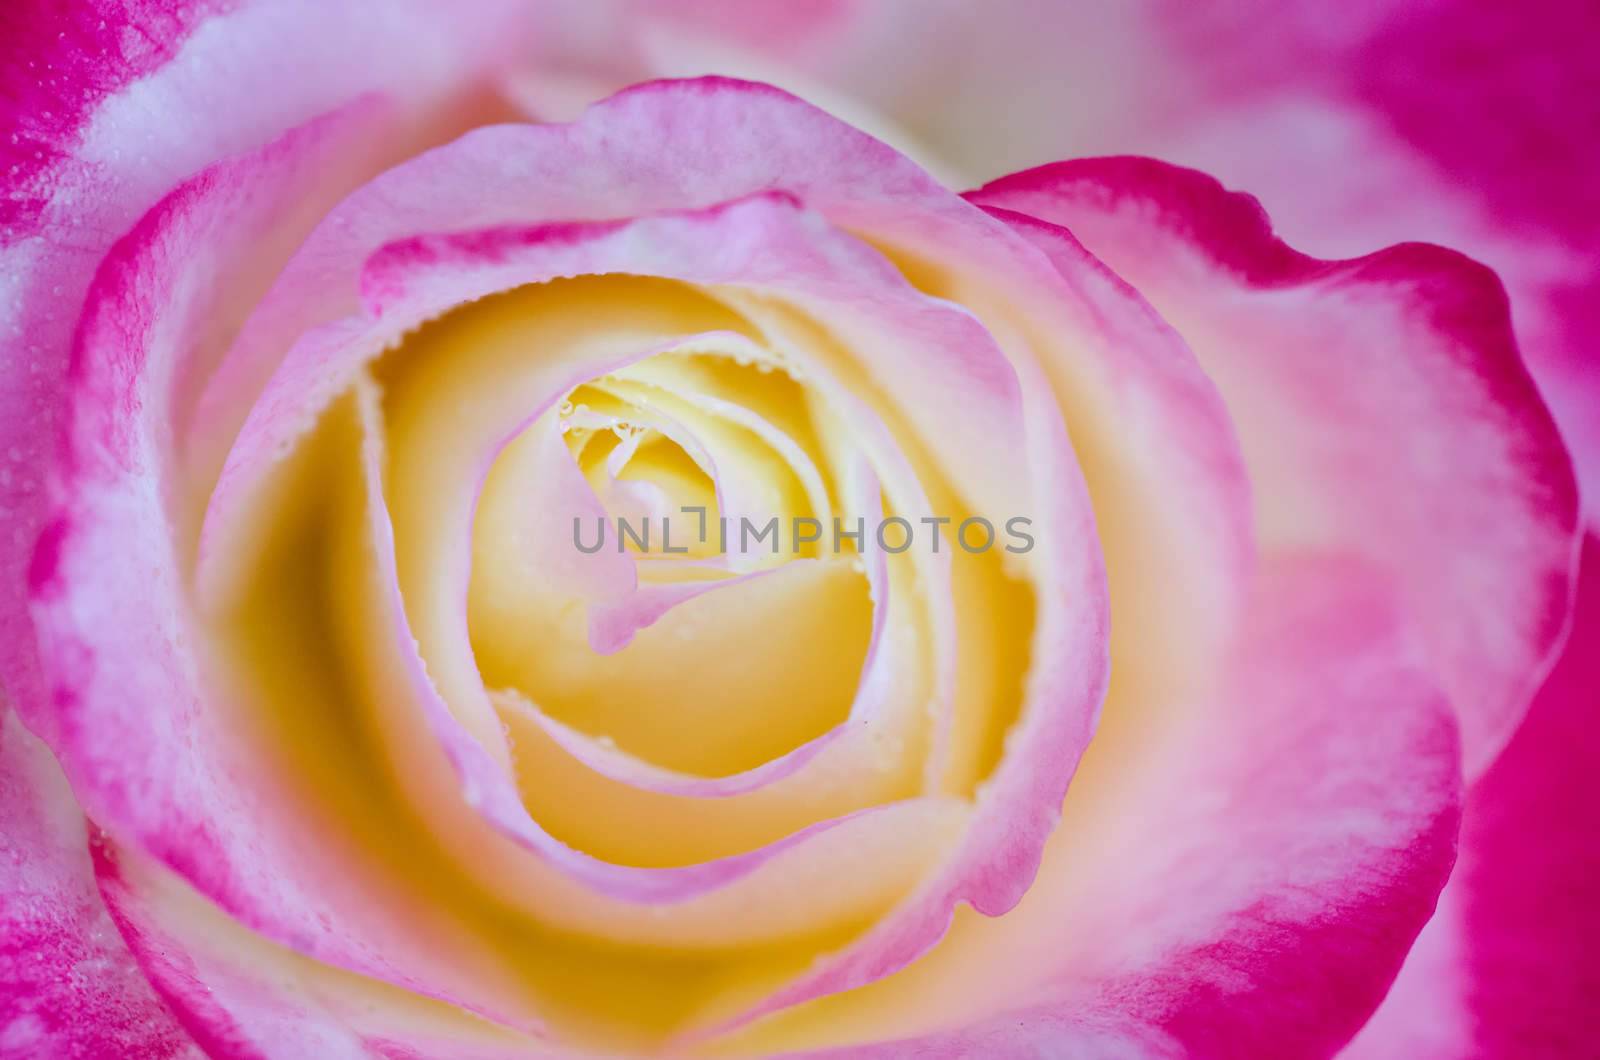 Bi-colour rose in macro / close-up shot